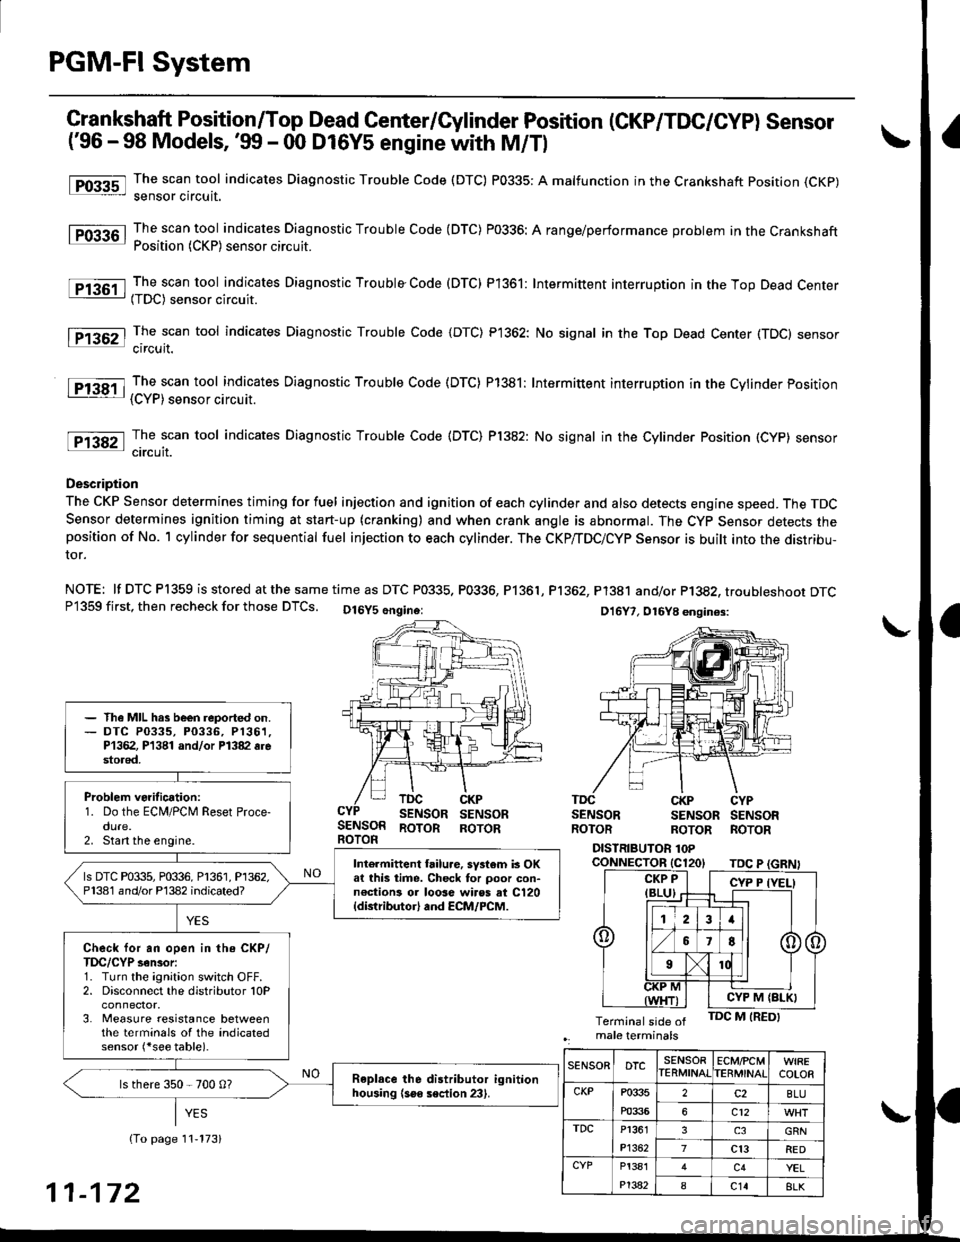 HONDA CIVIC 1999 6.G Repair Manual PGM-FI System
tFos3sl
tFffi6l
tPr361 I
fPfi62l
fFr38il
tF13s2-l
Crankshaft Position/Top Dead Genter/Gylinder Position (CKP/TDC/CYP) Sensor
(96 - 98 Models, !n - 00 D16Y5 engine with M/Tl
The scan to